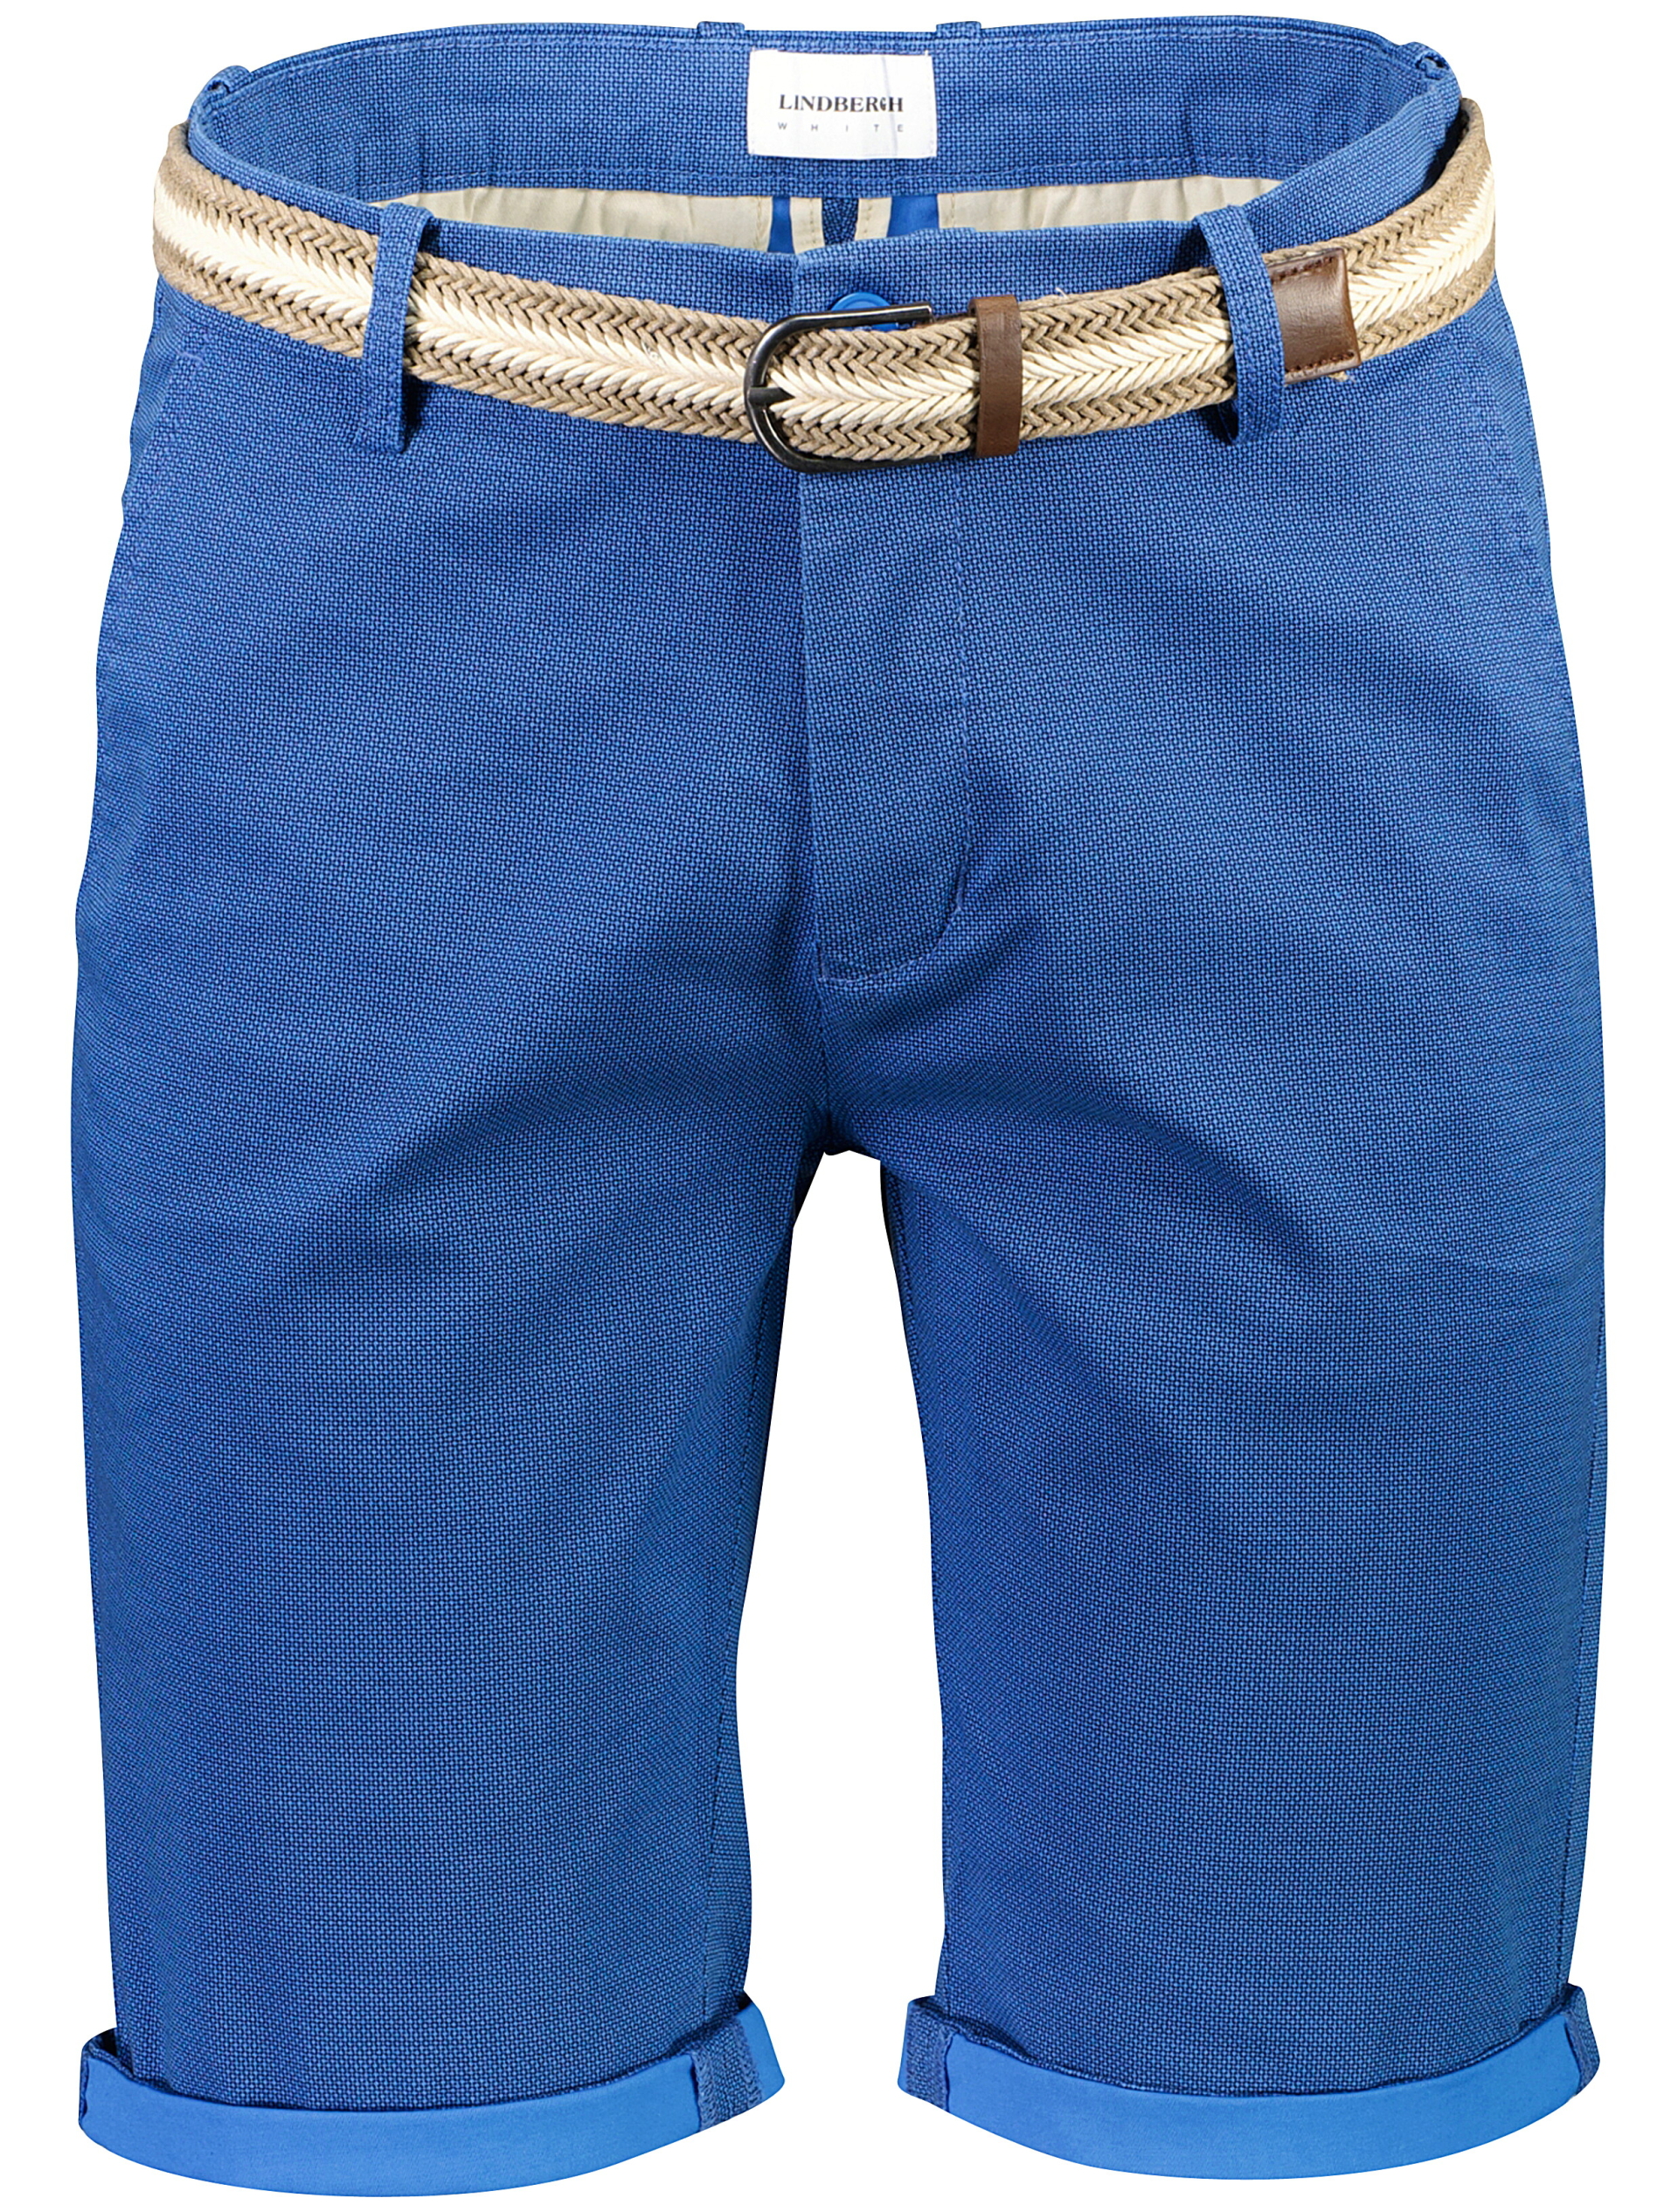 Lindbergh Chino shorts blue / true blue